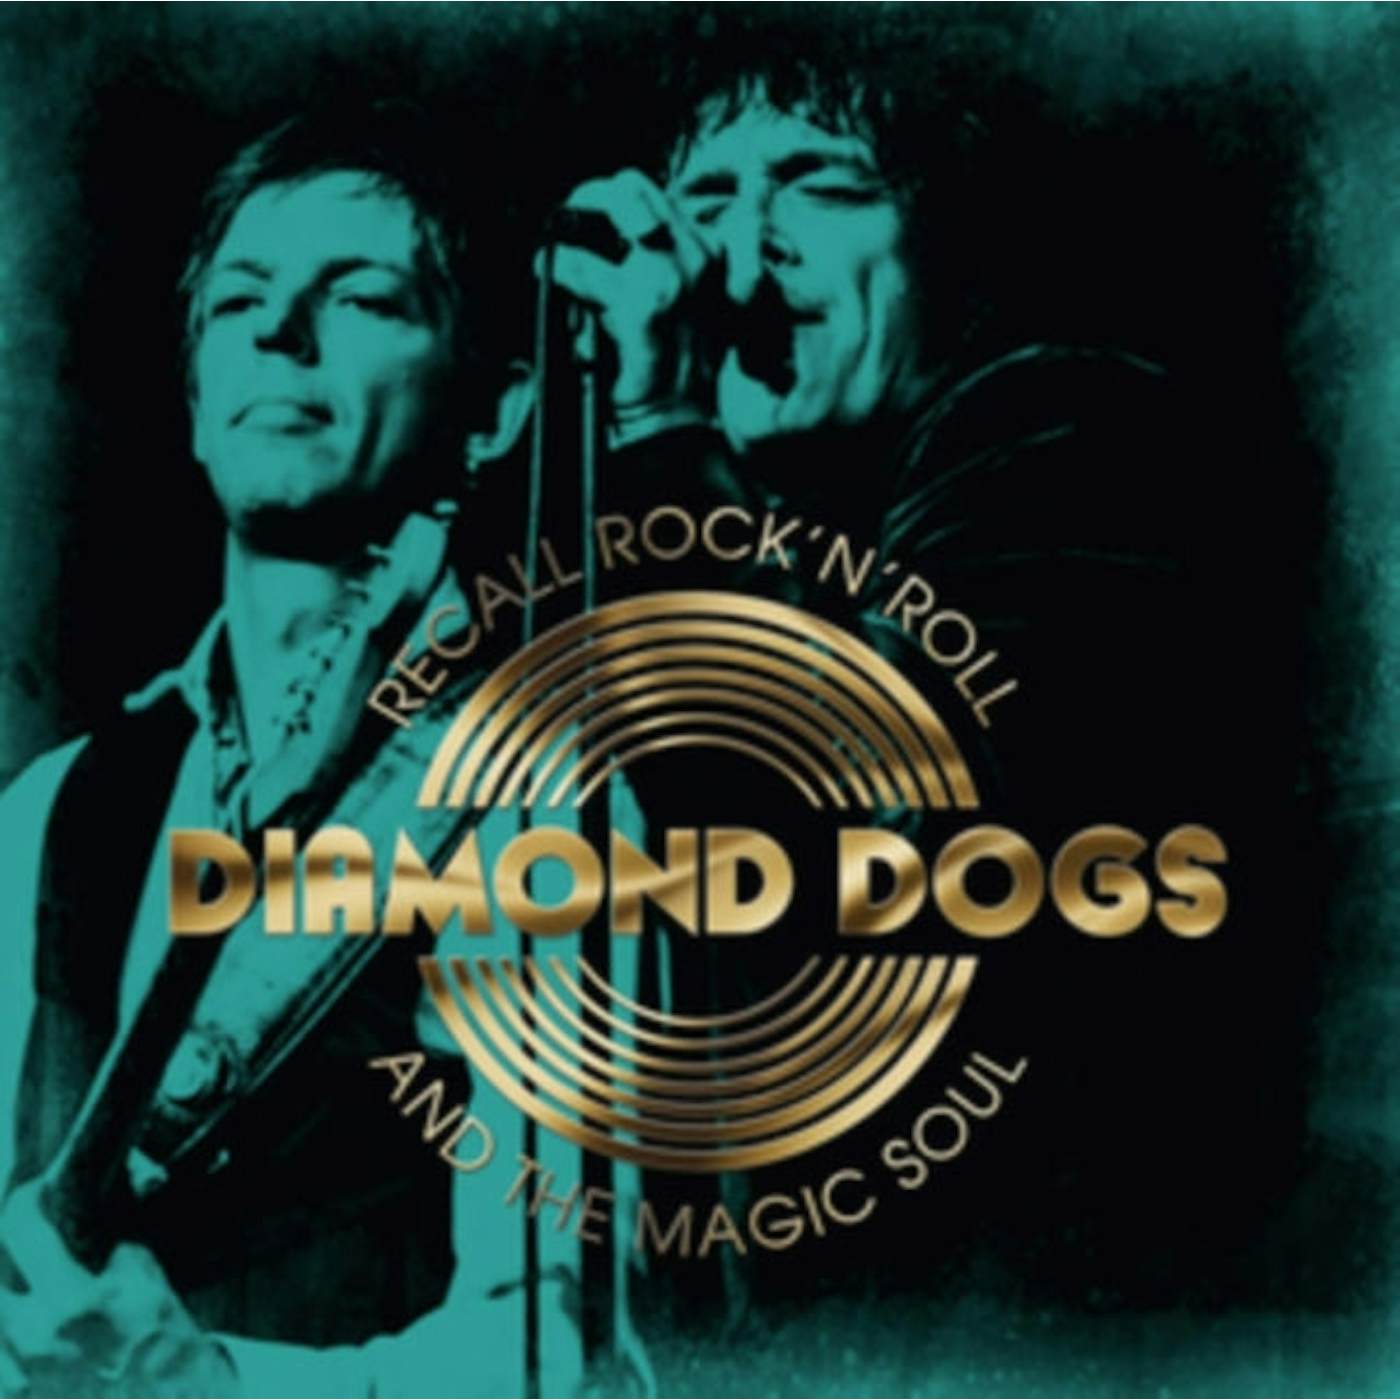 Diamond Dogs LP - Recall Rock 'N' Roll And The Magic Soul (Vinyl)